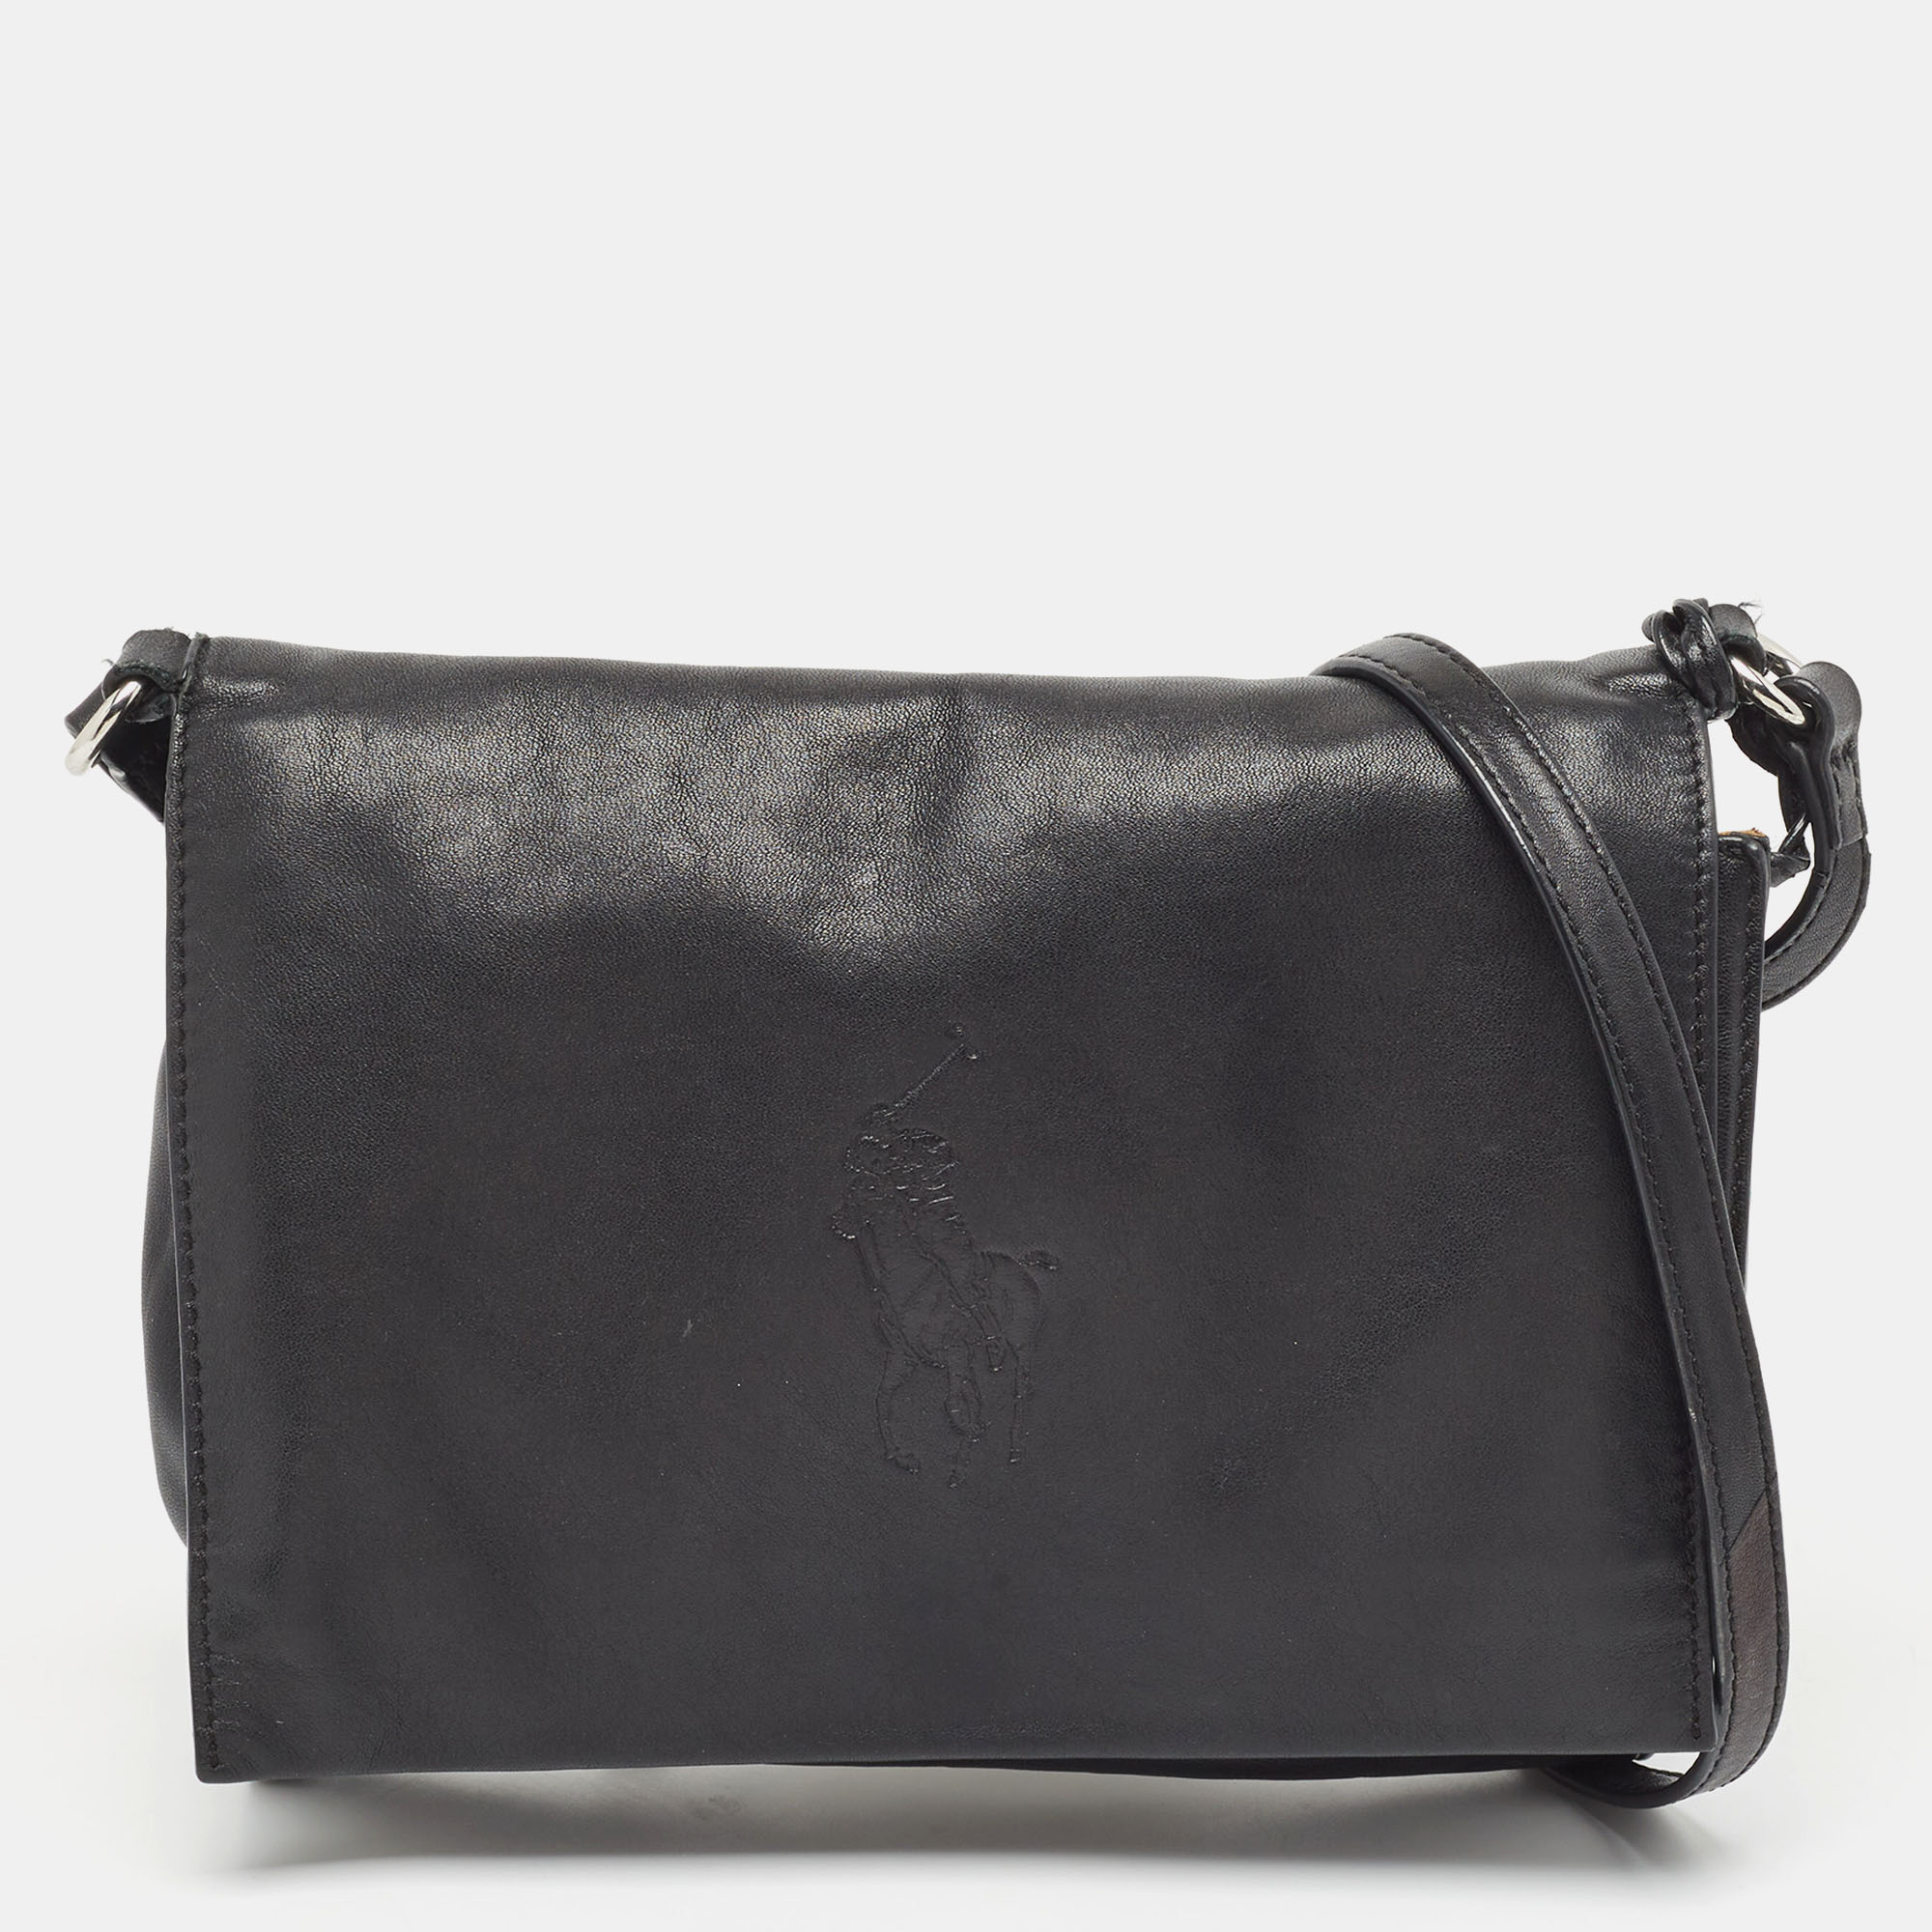 Ralph lauren black leather logo embossed flap messenger bag